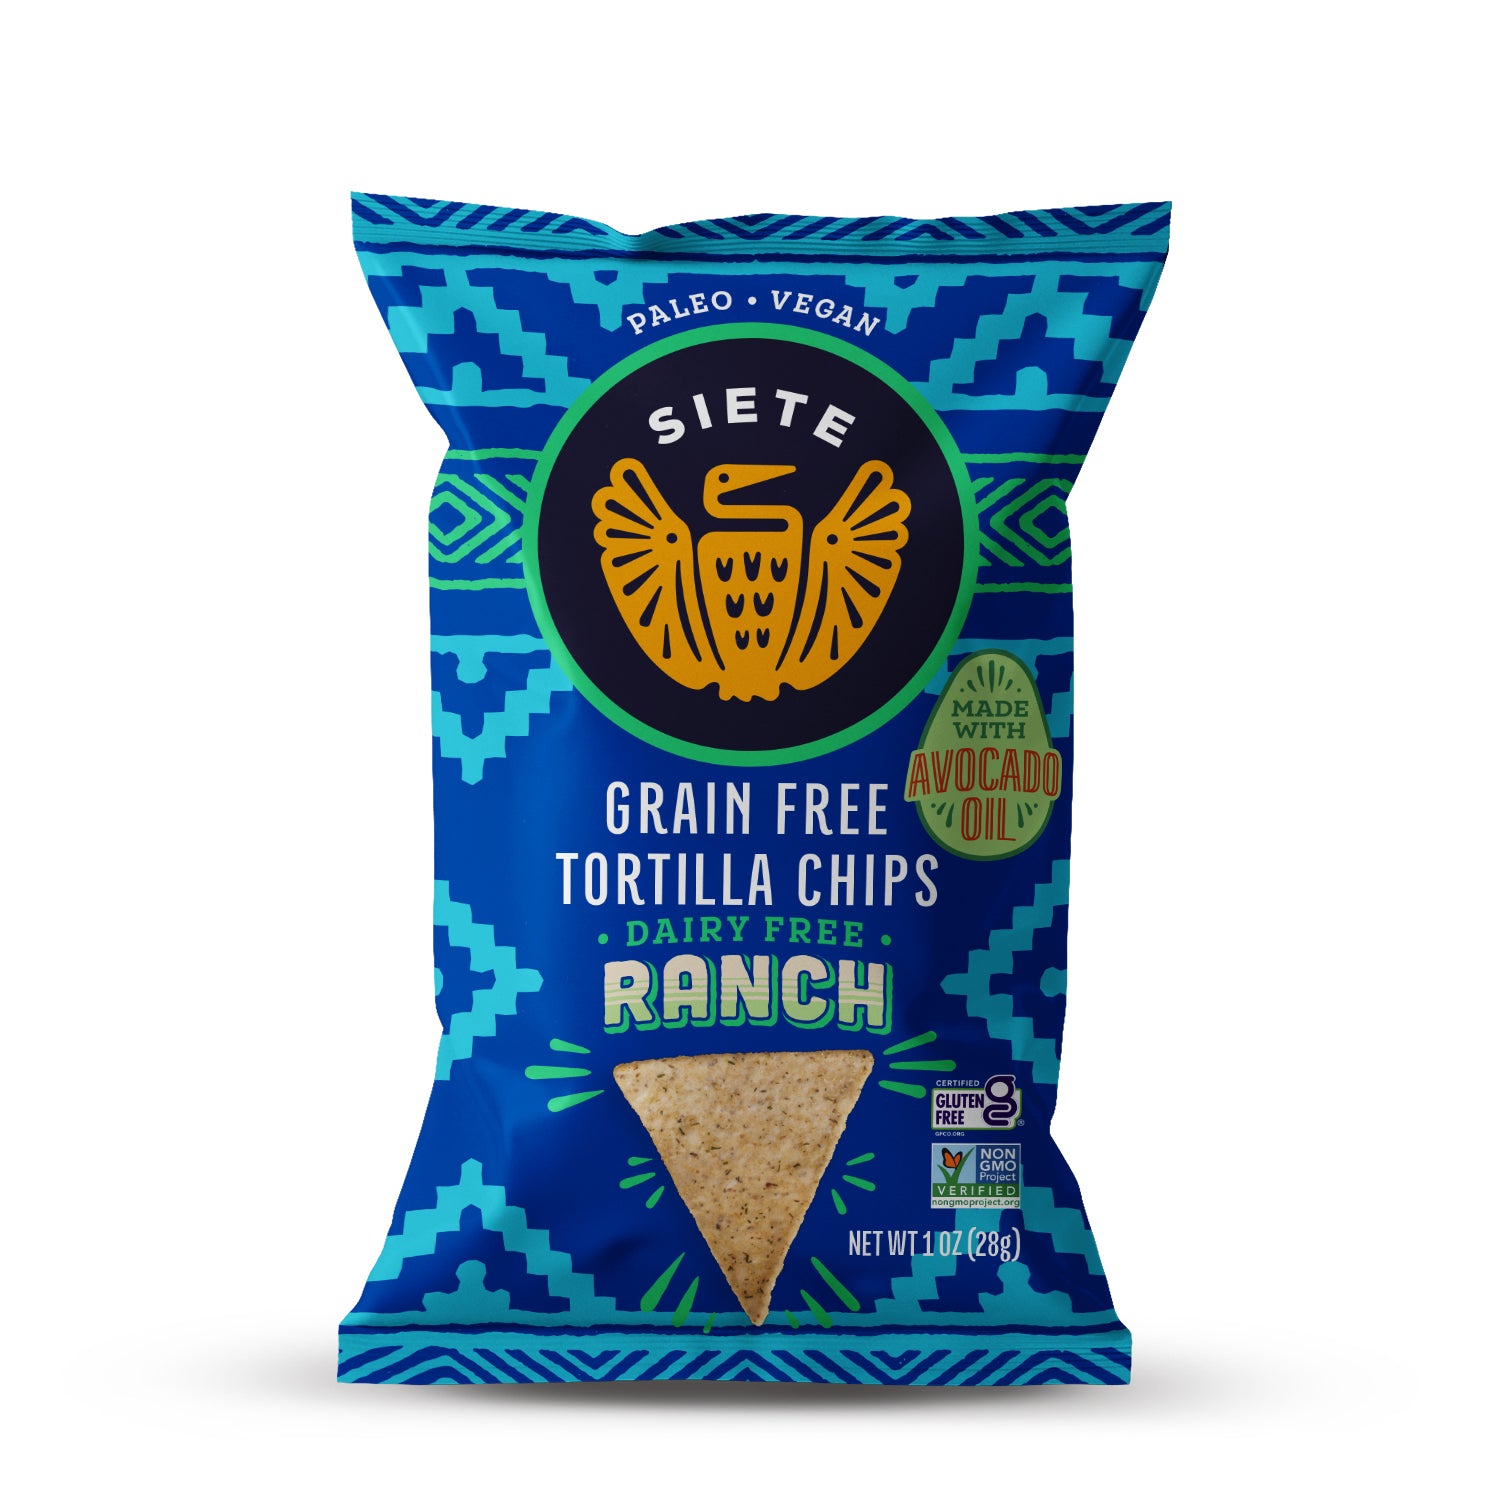 Ranch Grain Free Tortilla Chips 1 oz - 24 bags